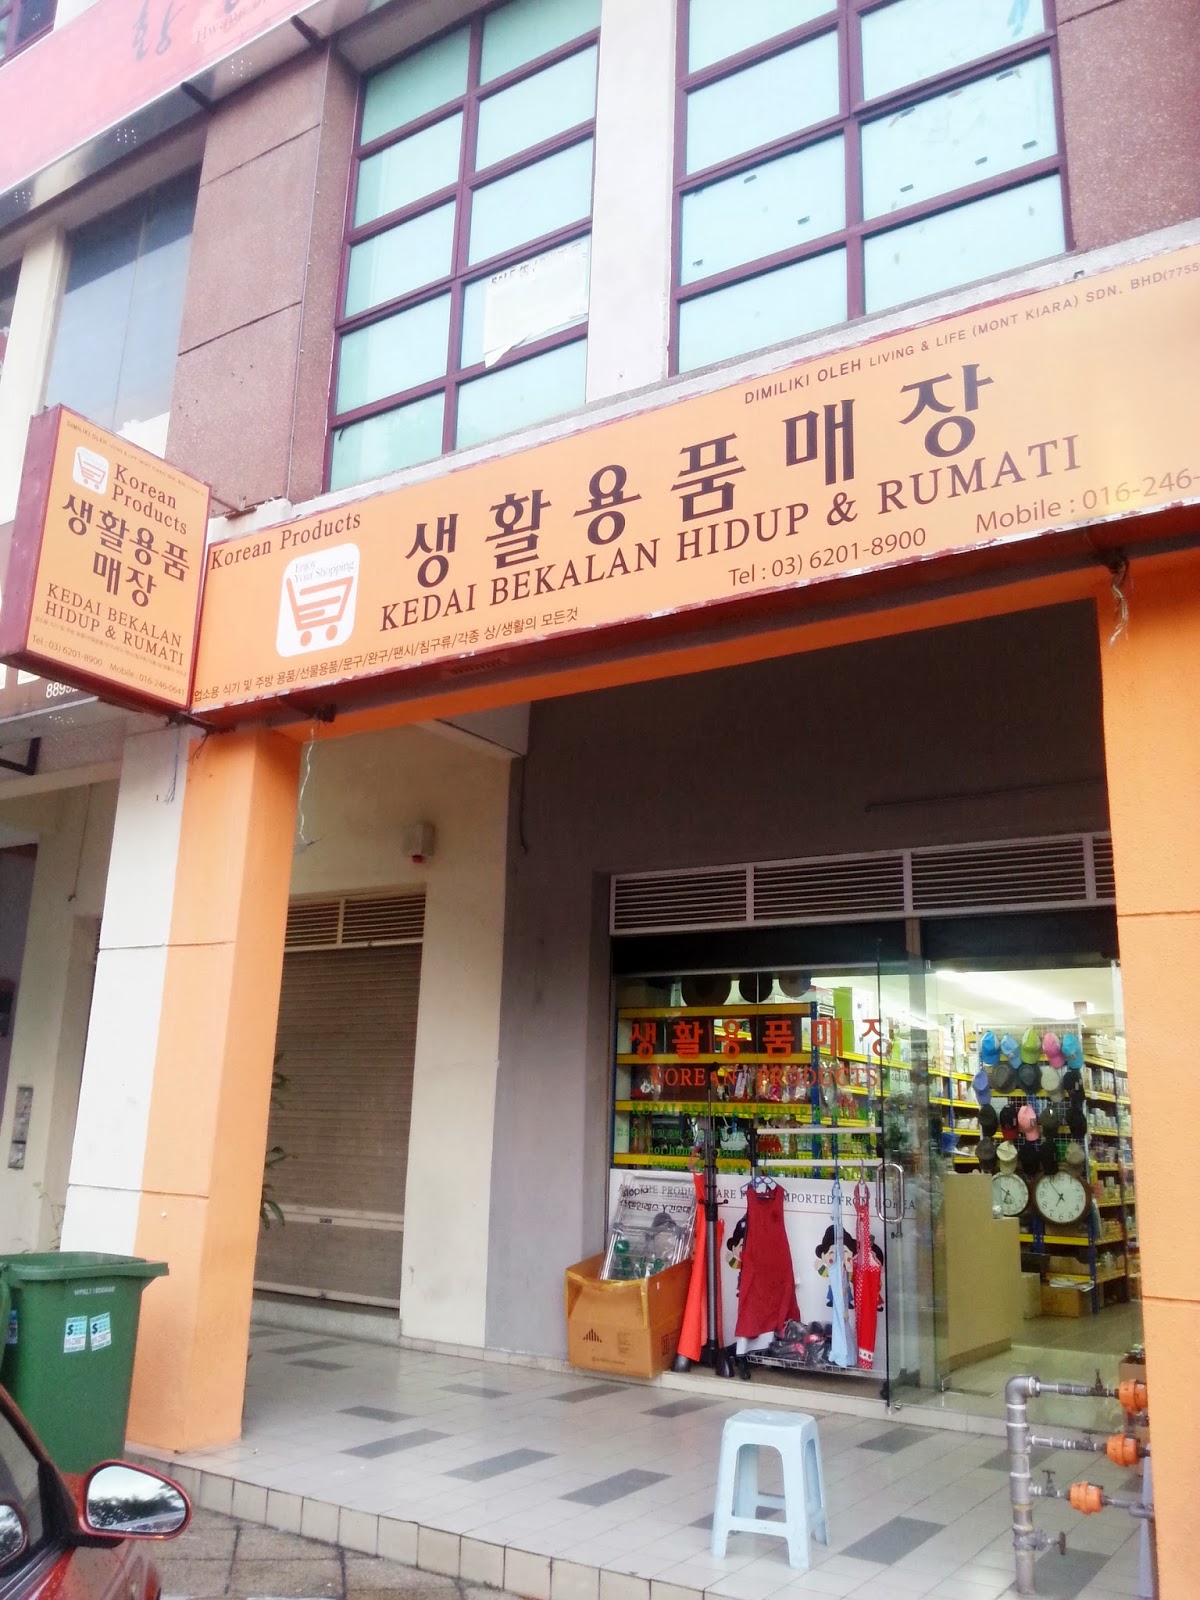 Place Korean  Products Desa Sri Hartamas Jessy The KL  